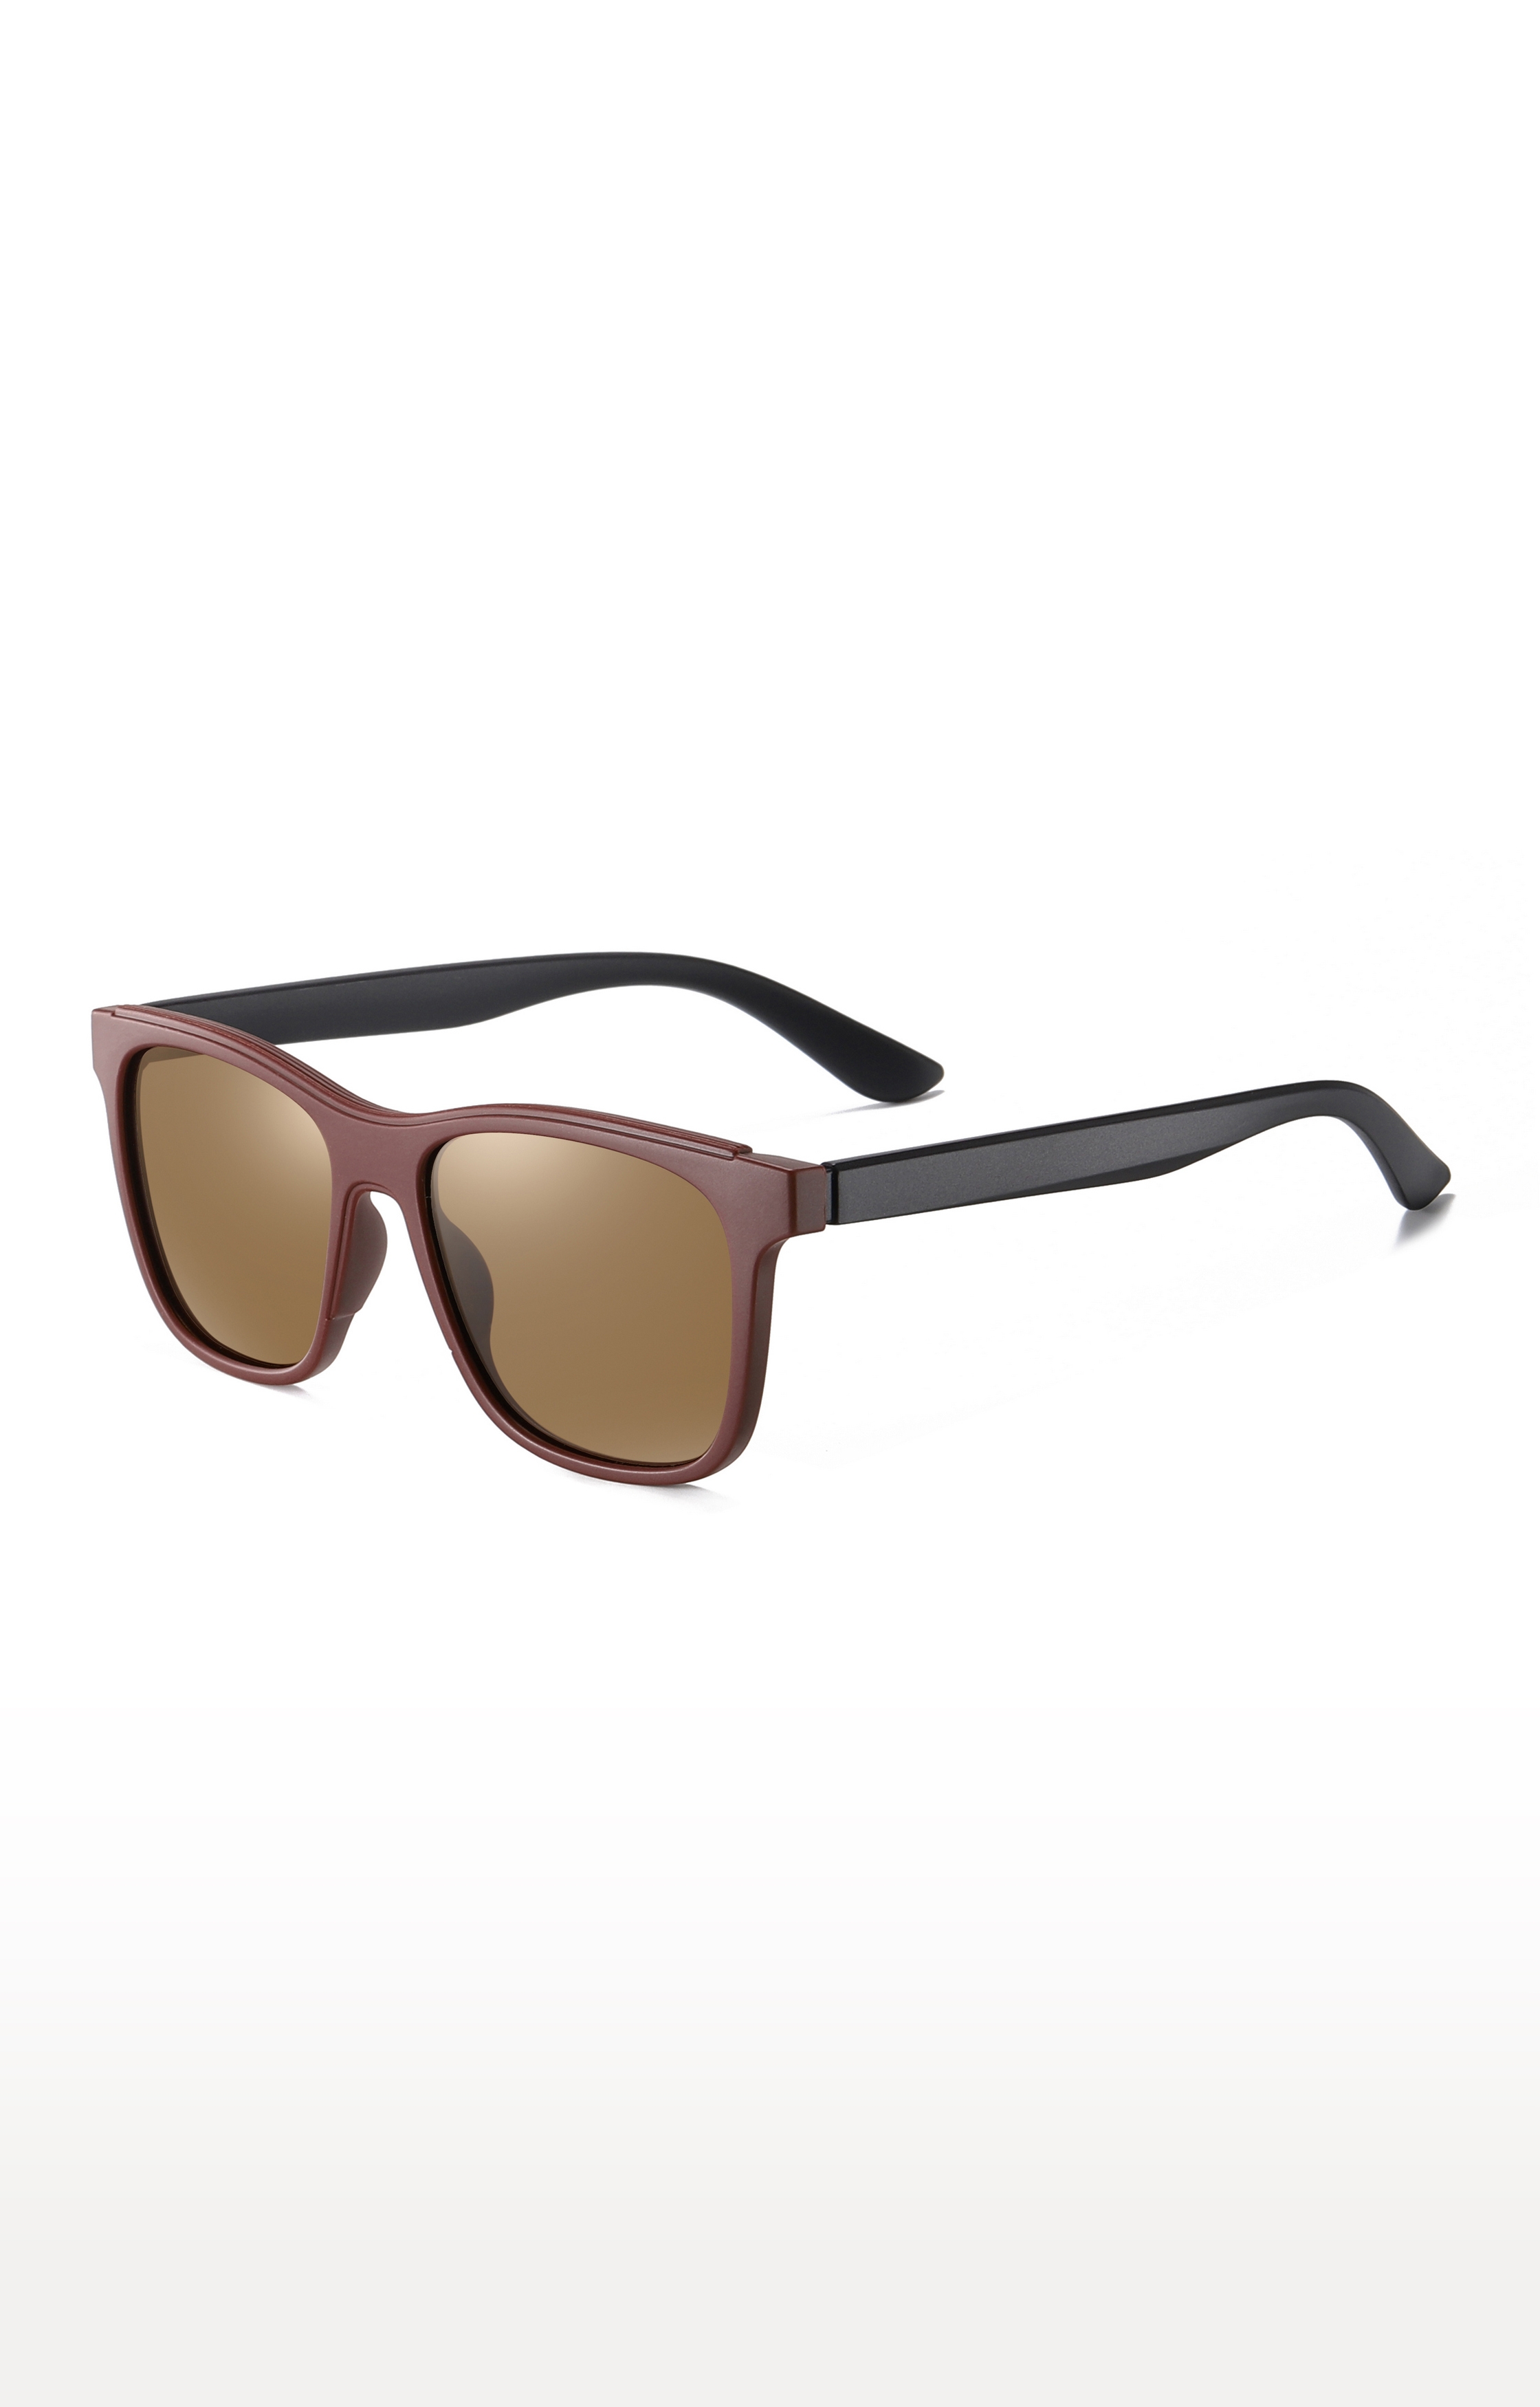 Aeropostale Wayfarer Sunglasses TR90 Frame with TAC Polarized Lenses